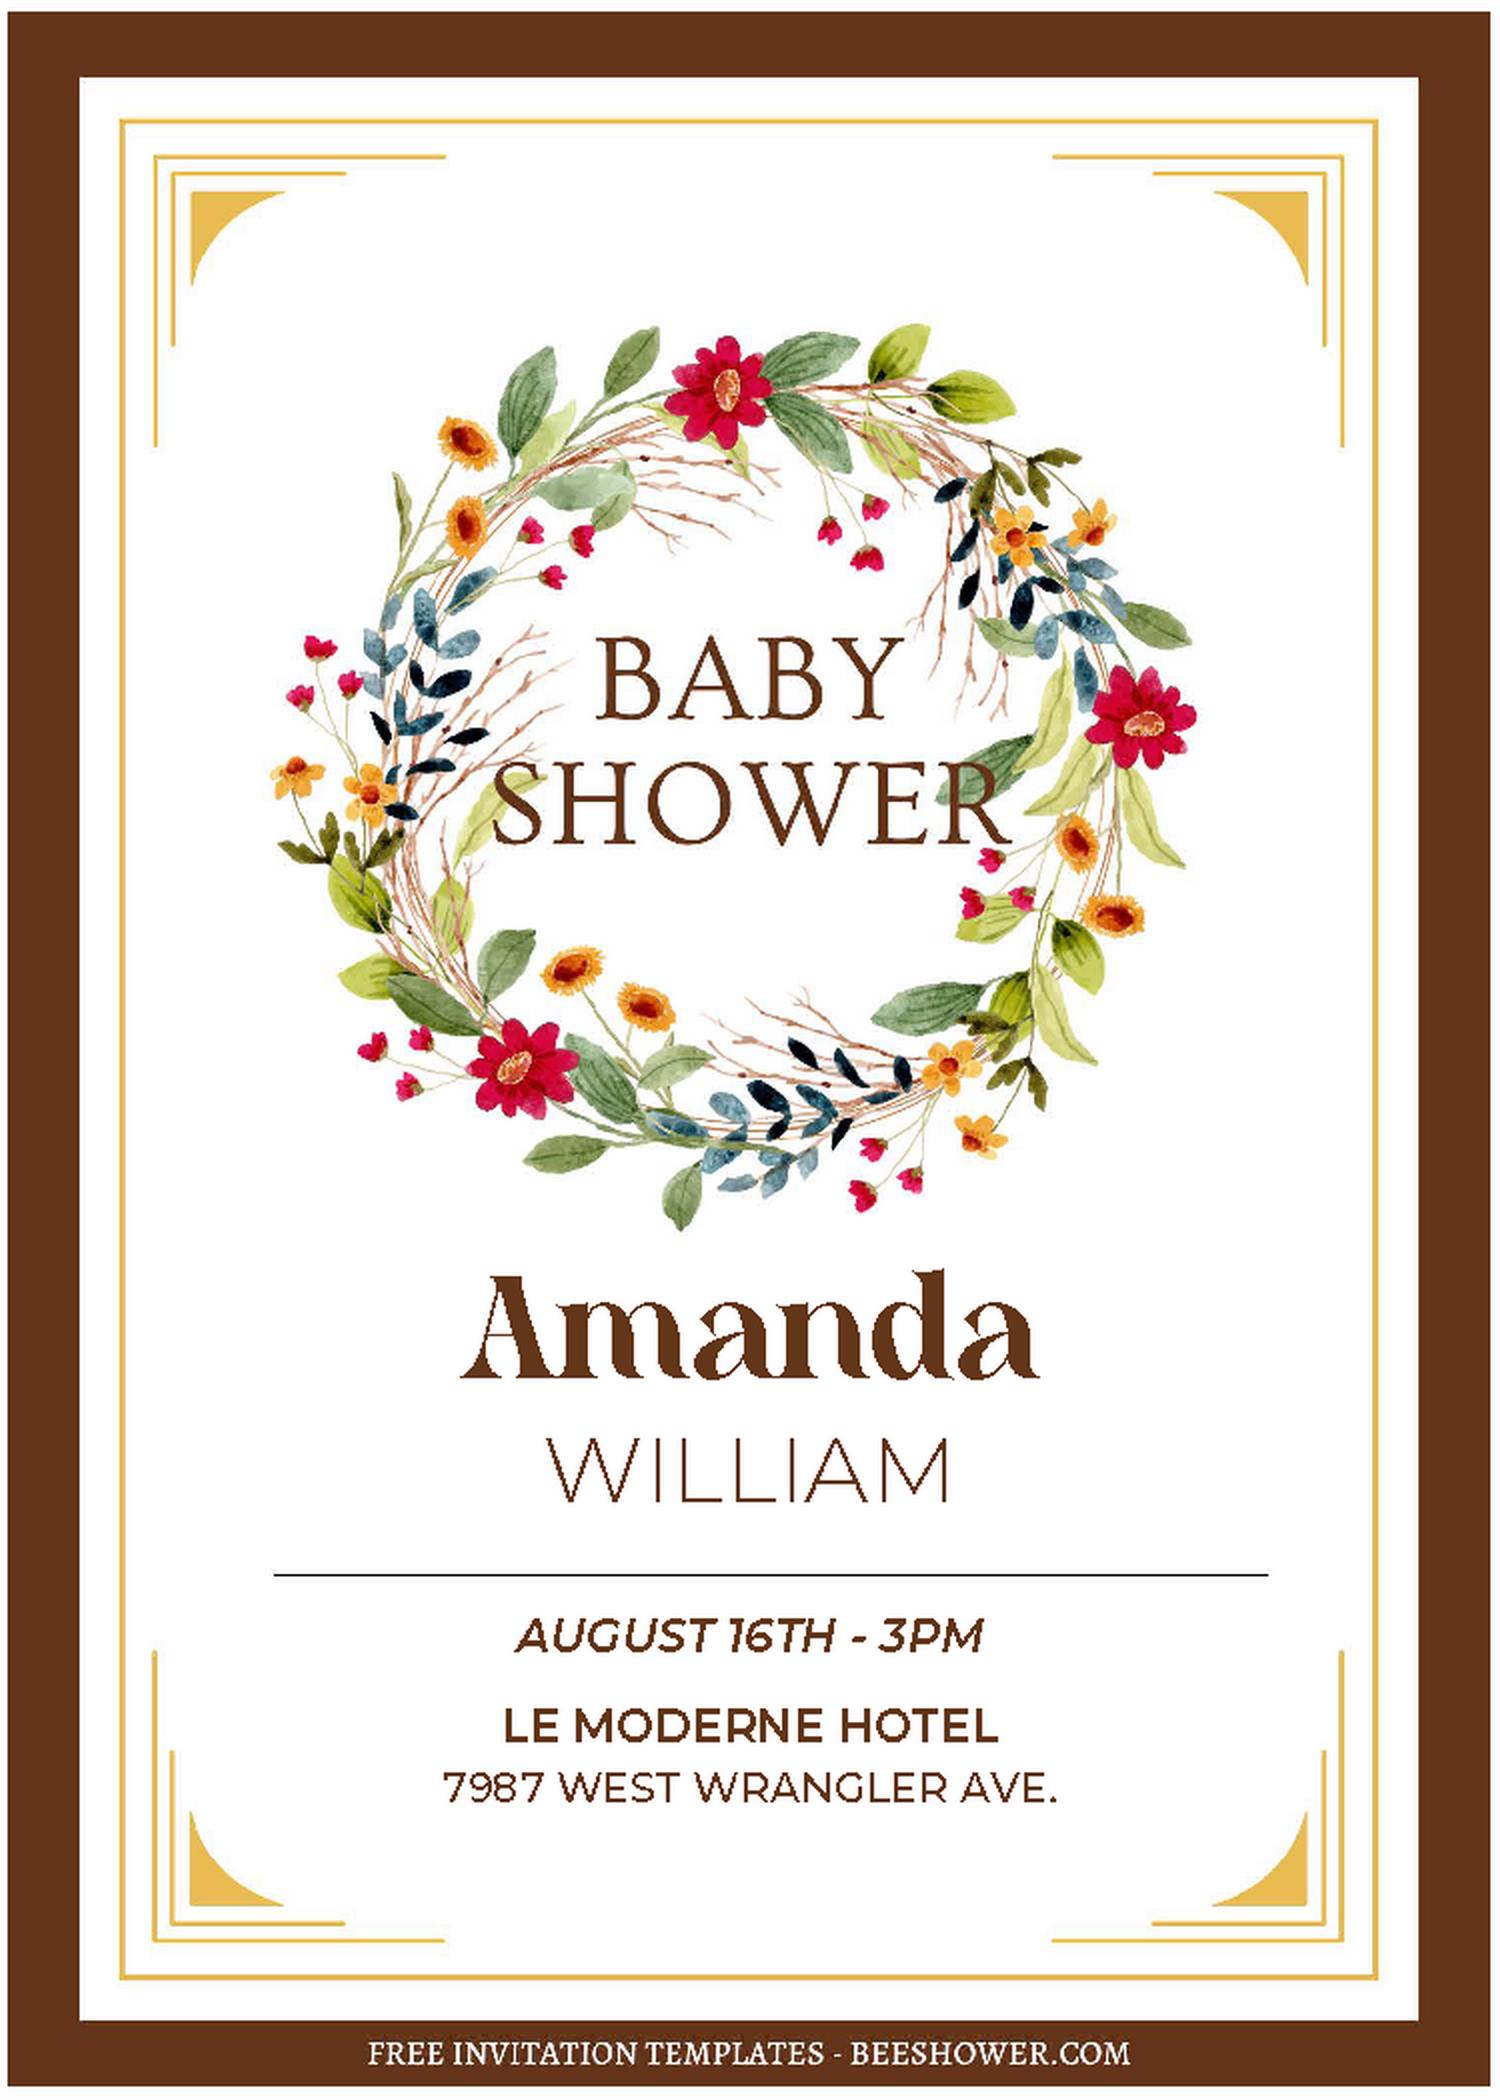 (Free Editable PDF) Sunflower Autumn Baby Shower Invitation Templates J